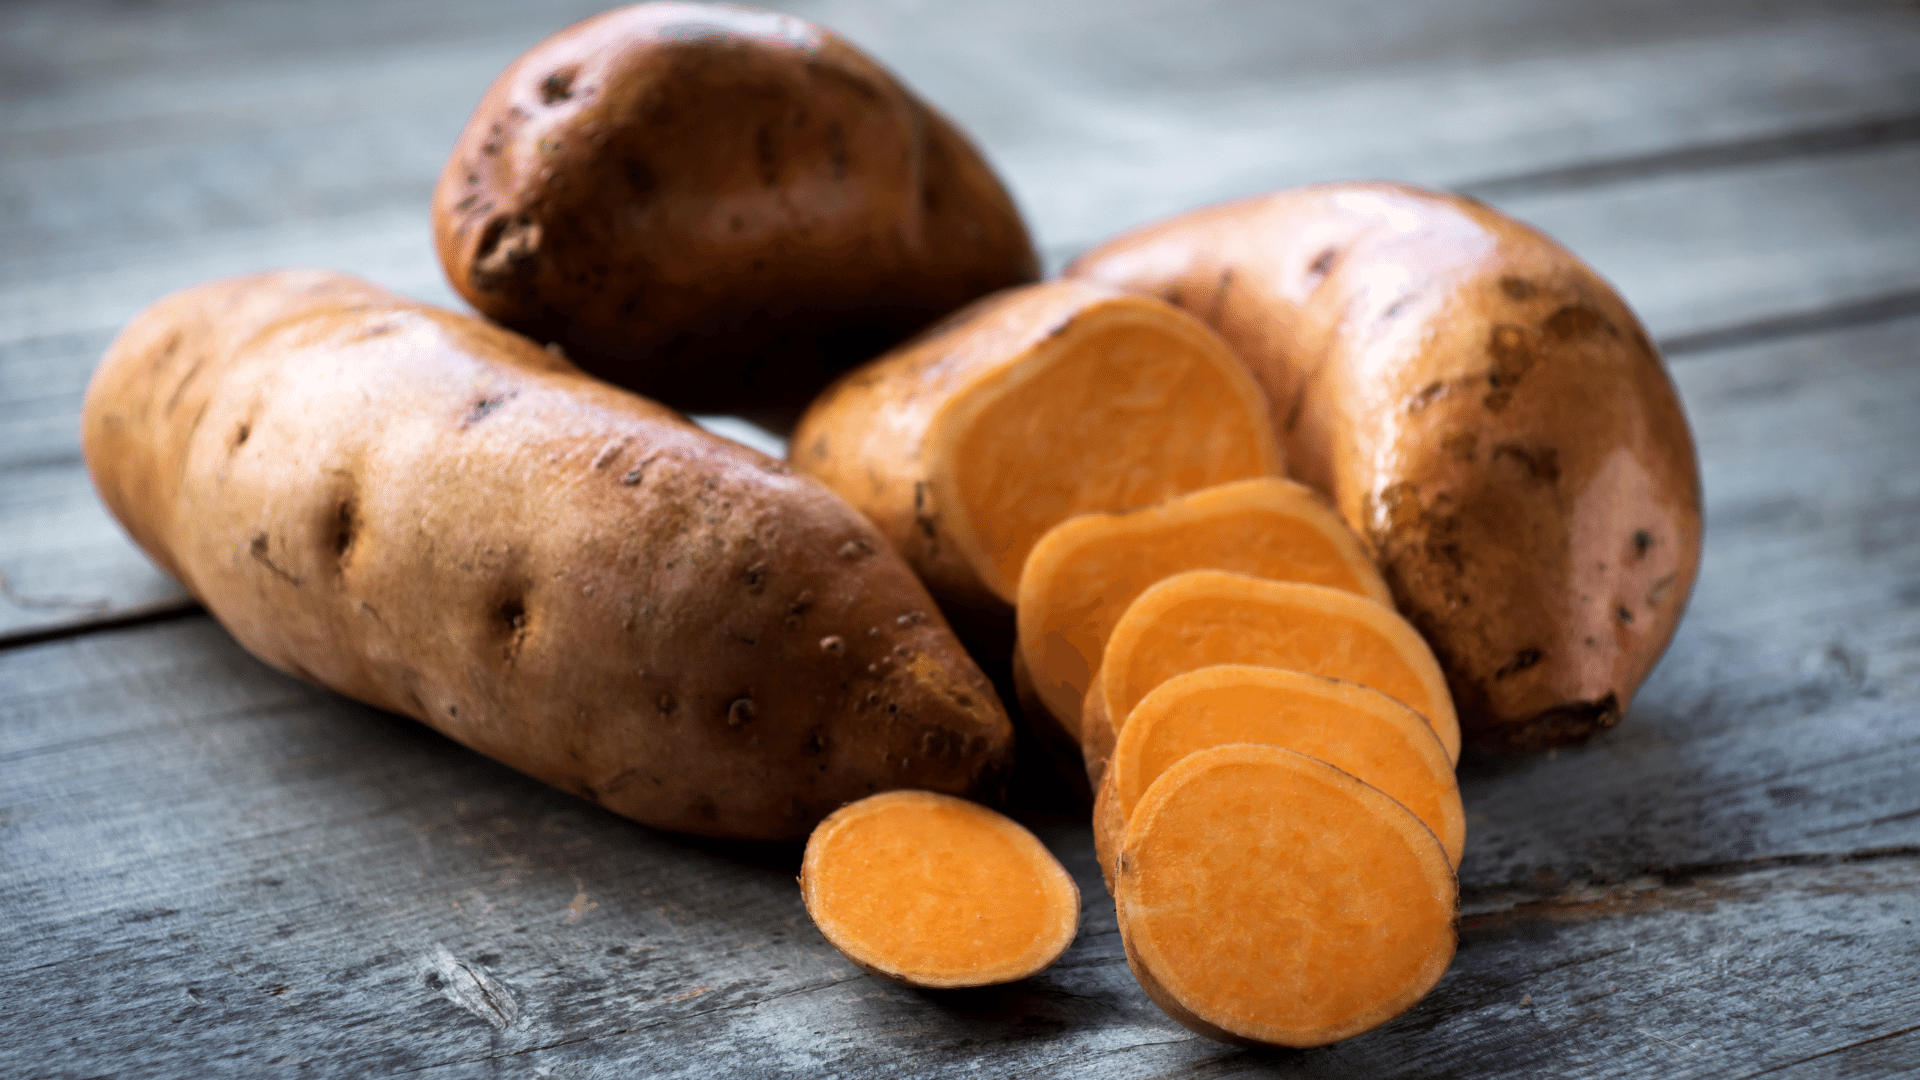 Yams, the origins behind the sweet potato